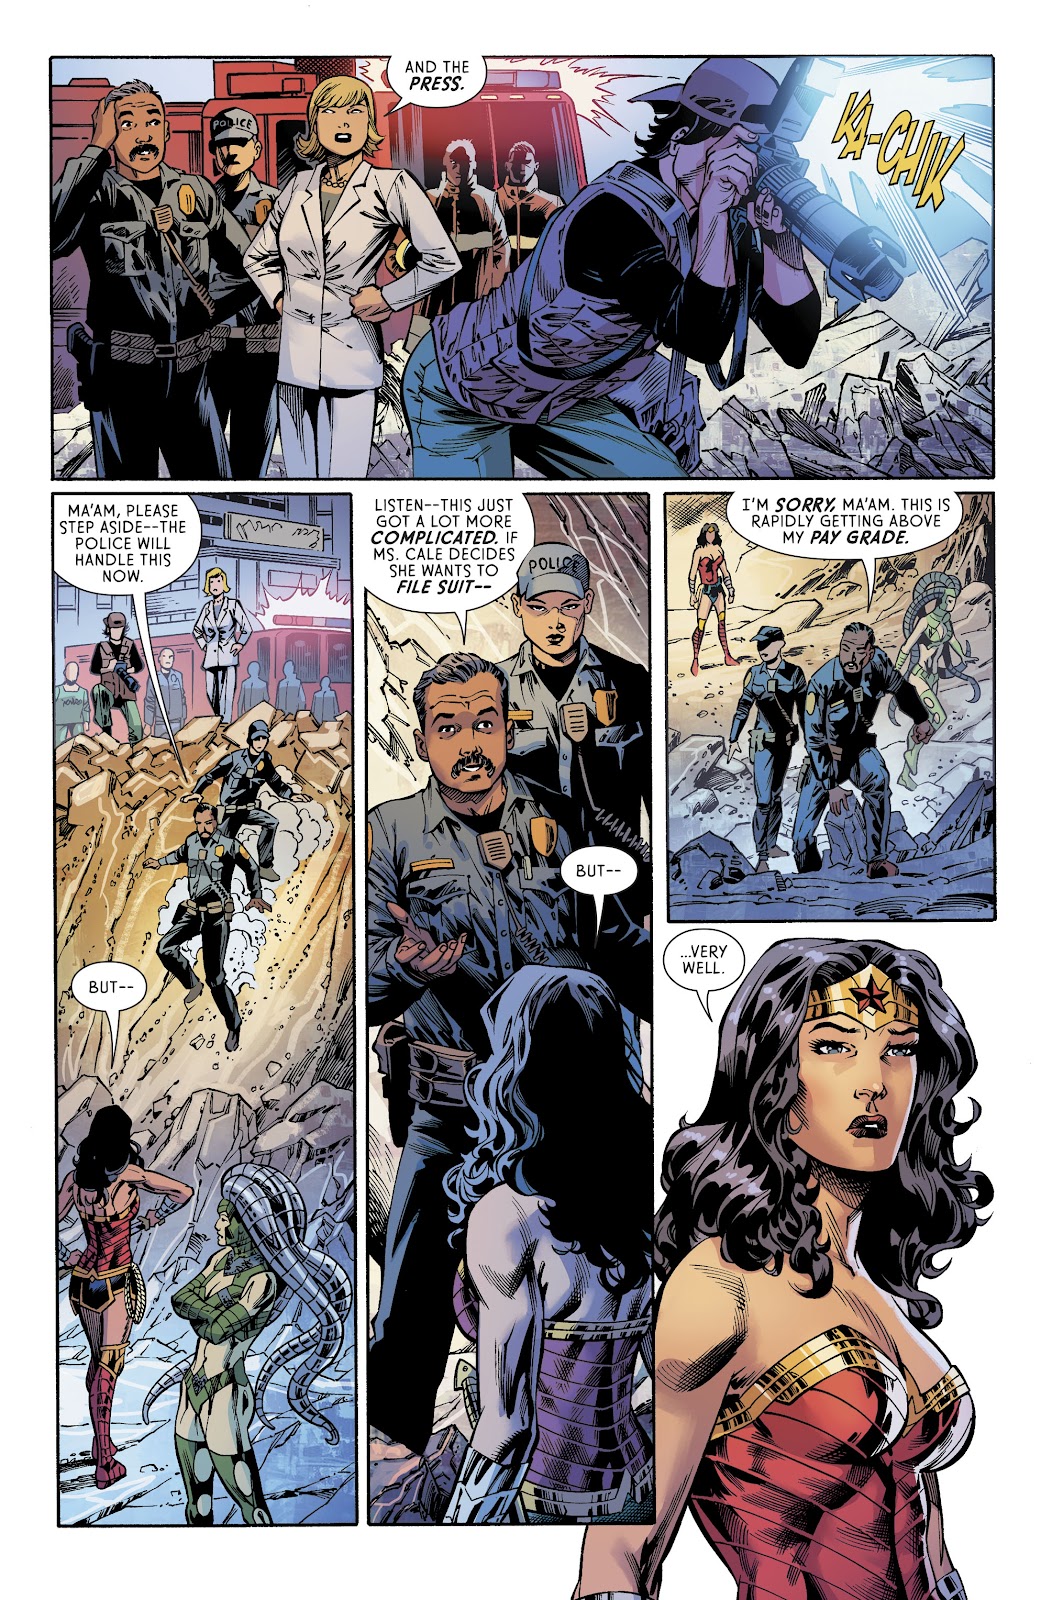 Wonder Woman 2016 Issue 64 | Read Wonder Woman 2016 Issue 64 comic ...